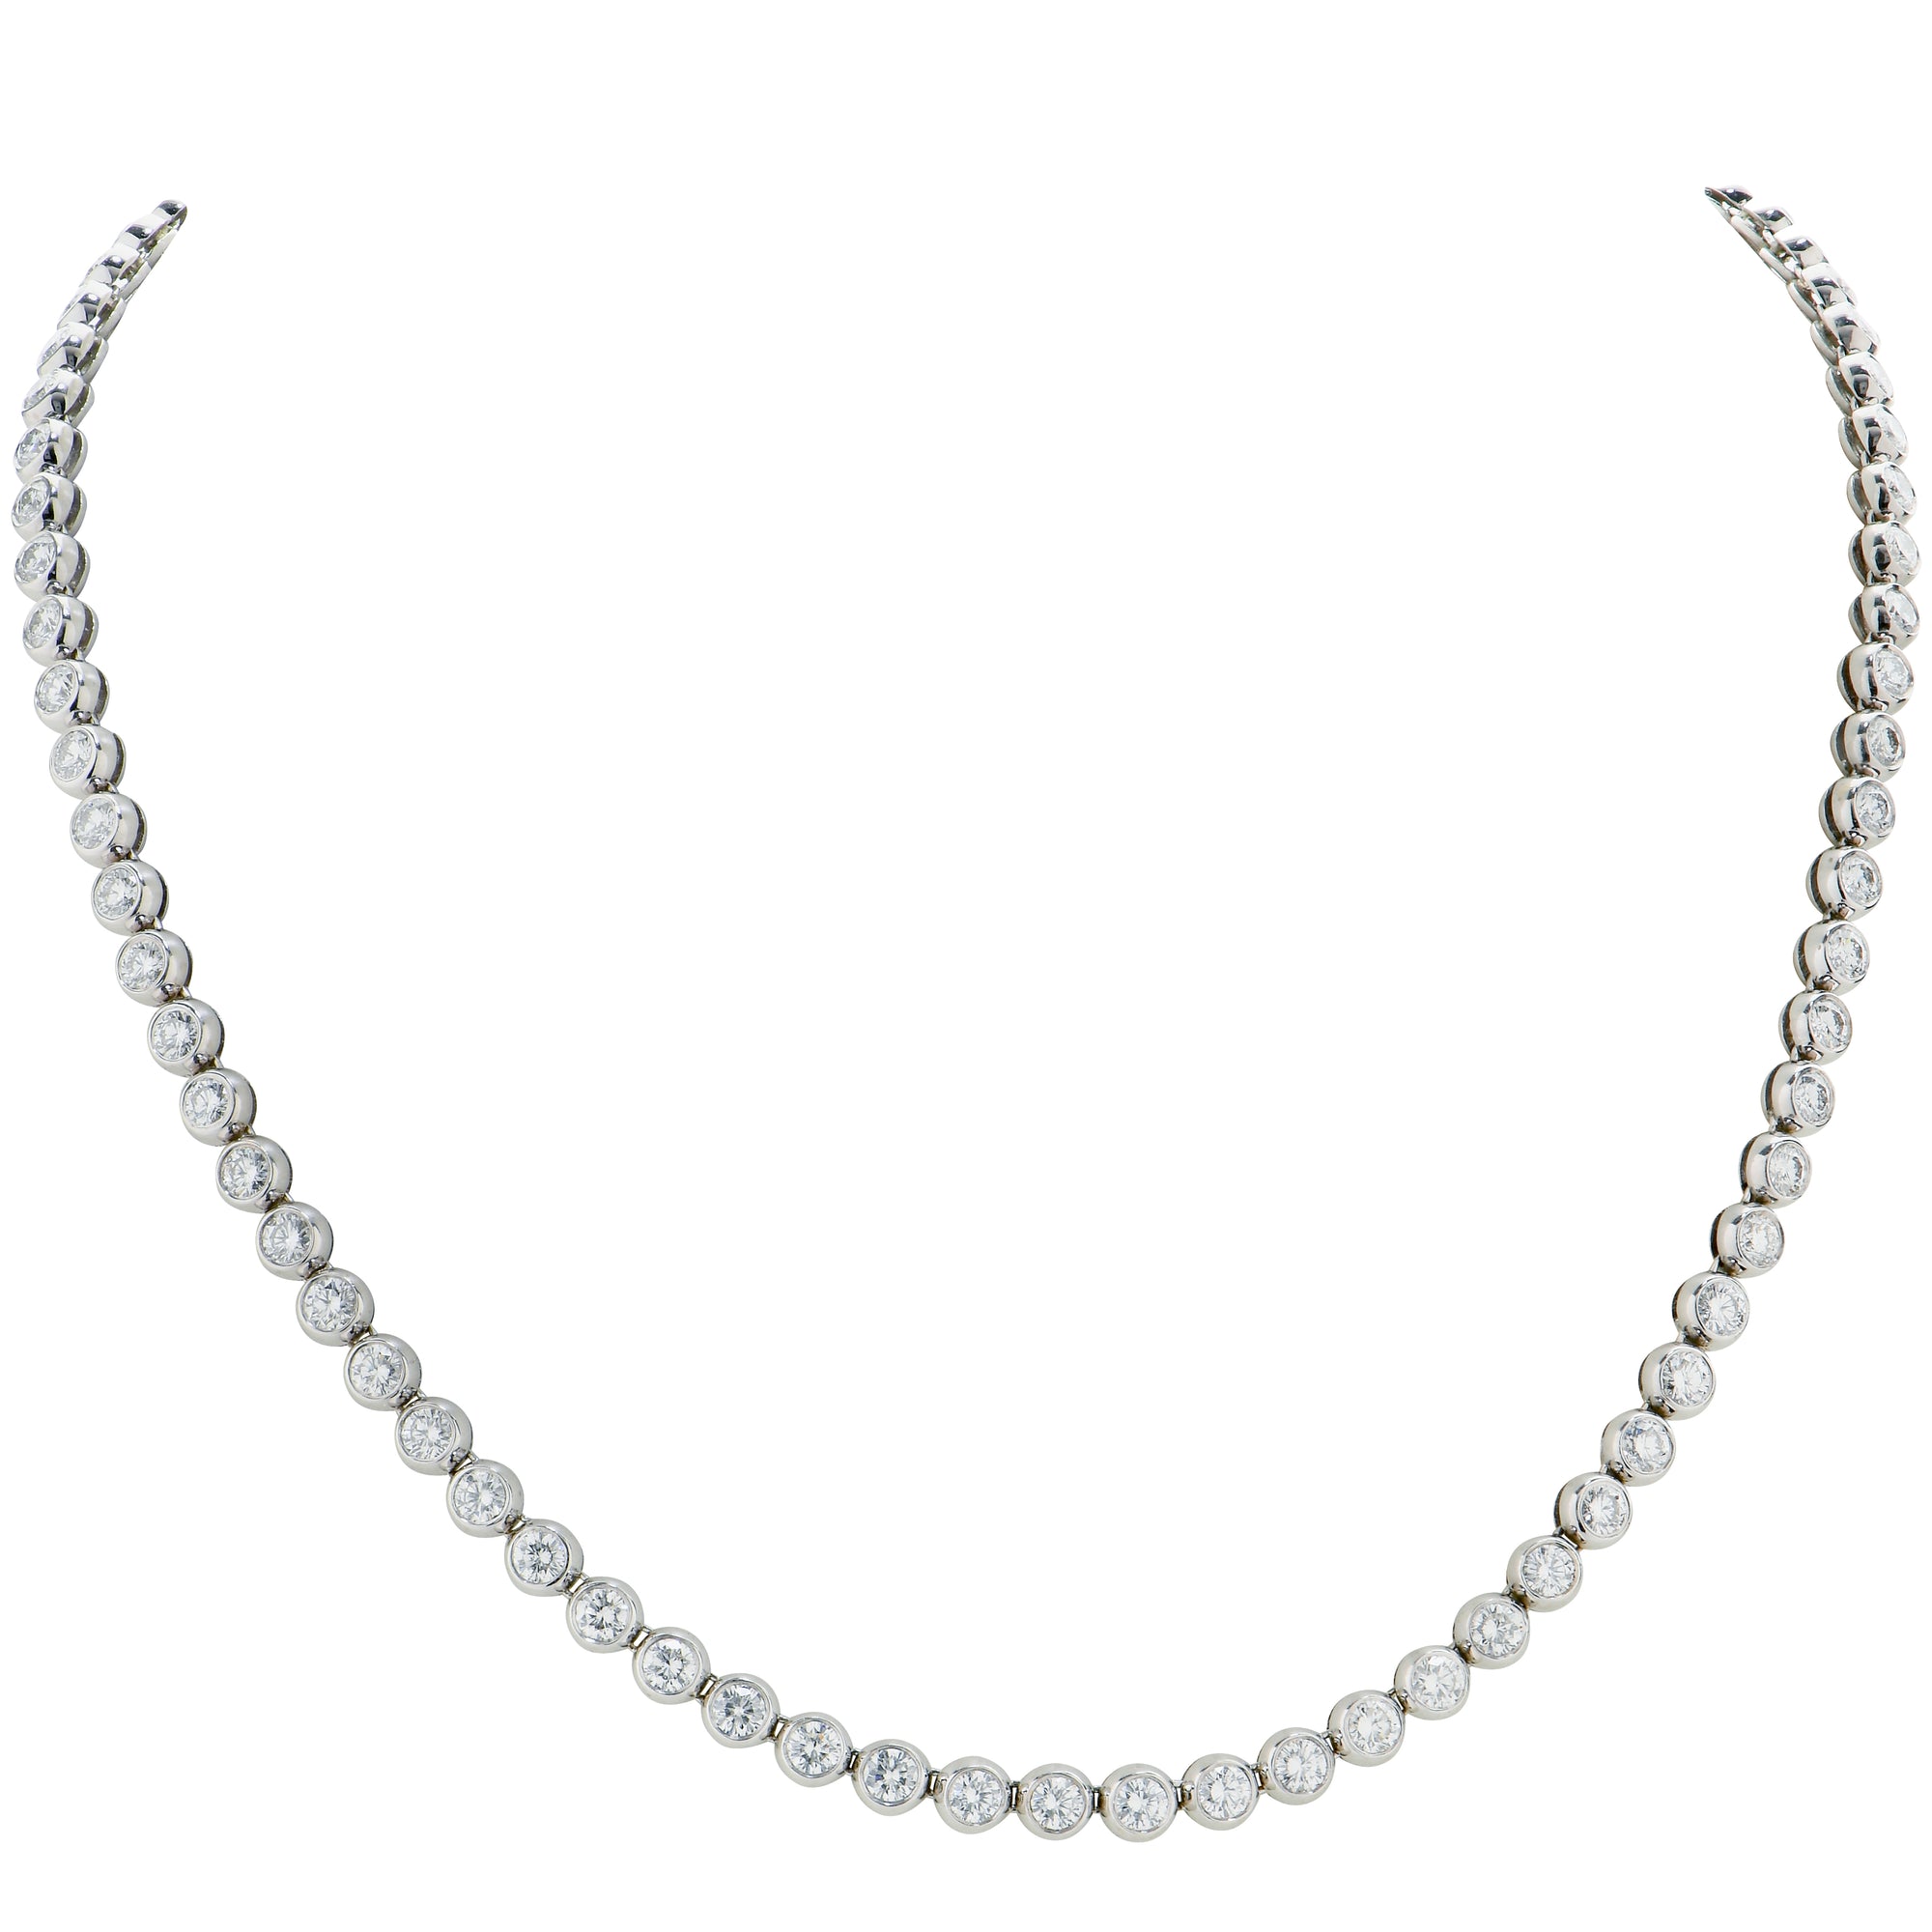 10 Carat Diamond Riviera Necklace in 18 Karat White Gold